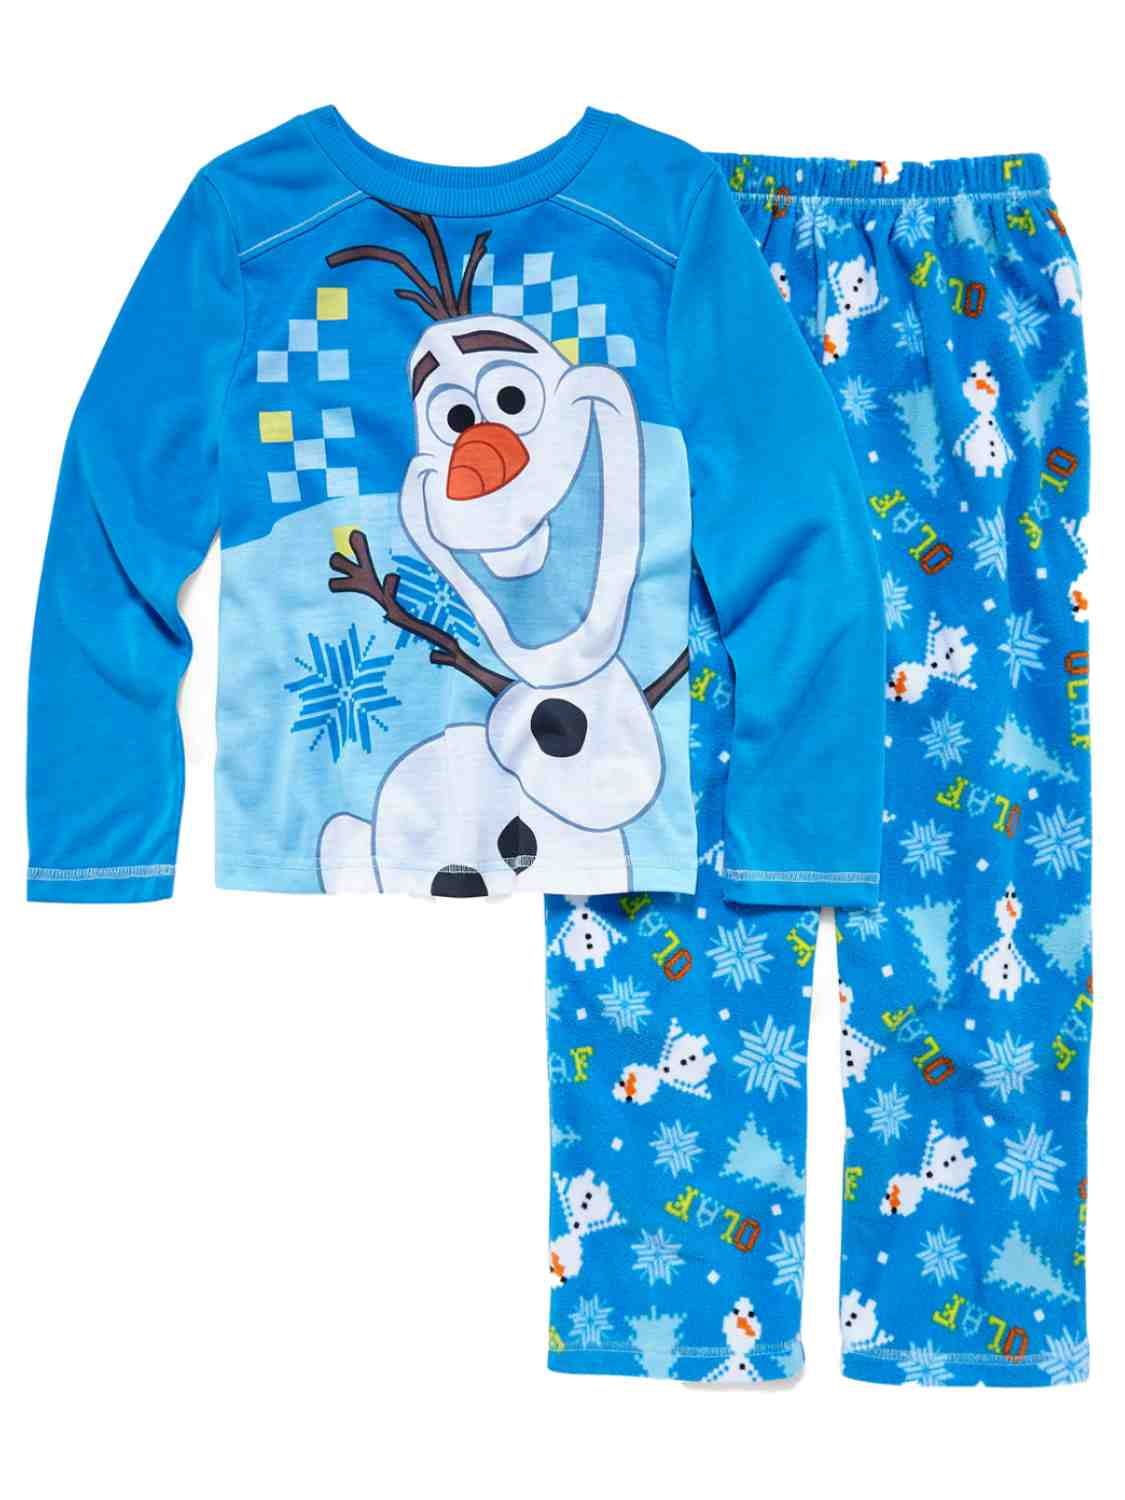 Boys Girls Disney Frozen Olaf blue and Green Pajamas Sleepwear to fit 5 or 6 